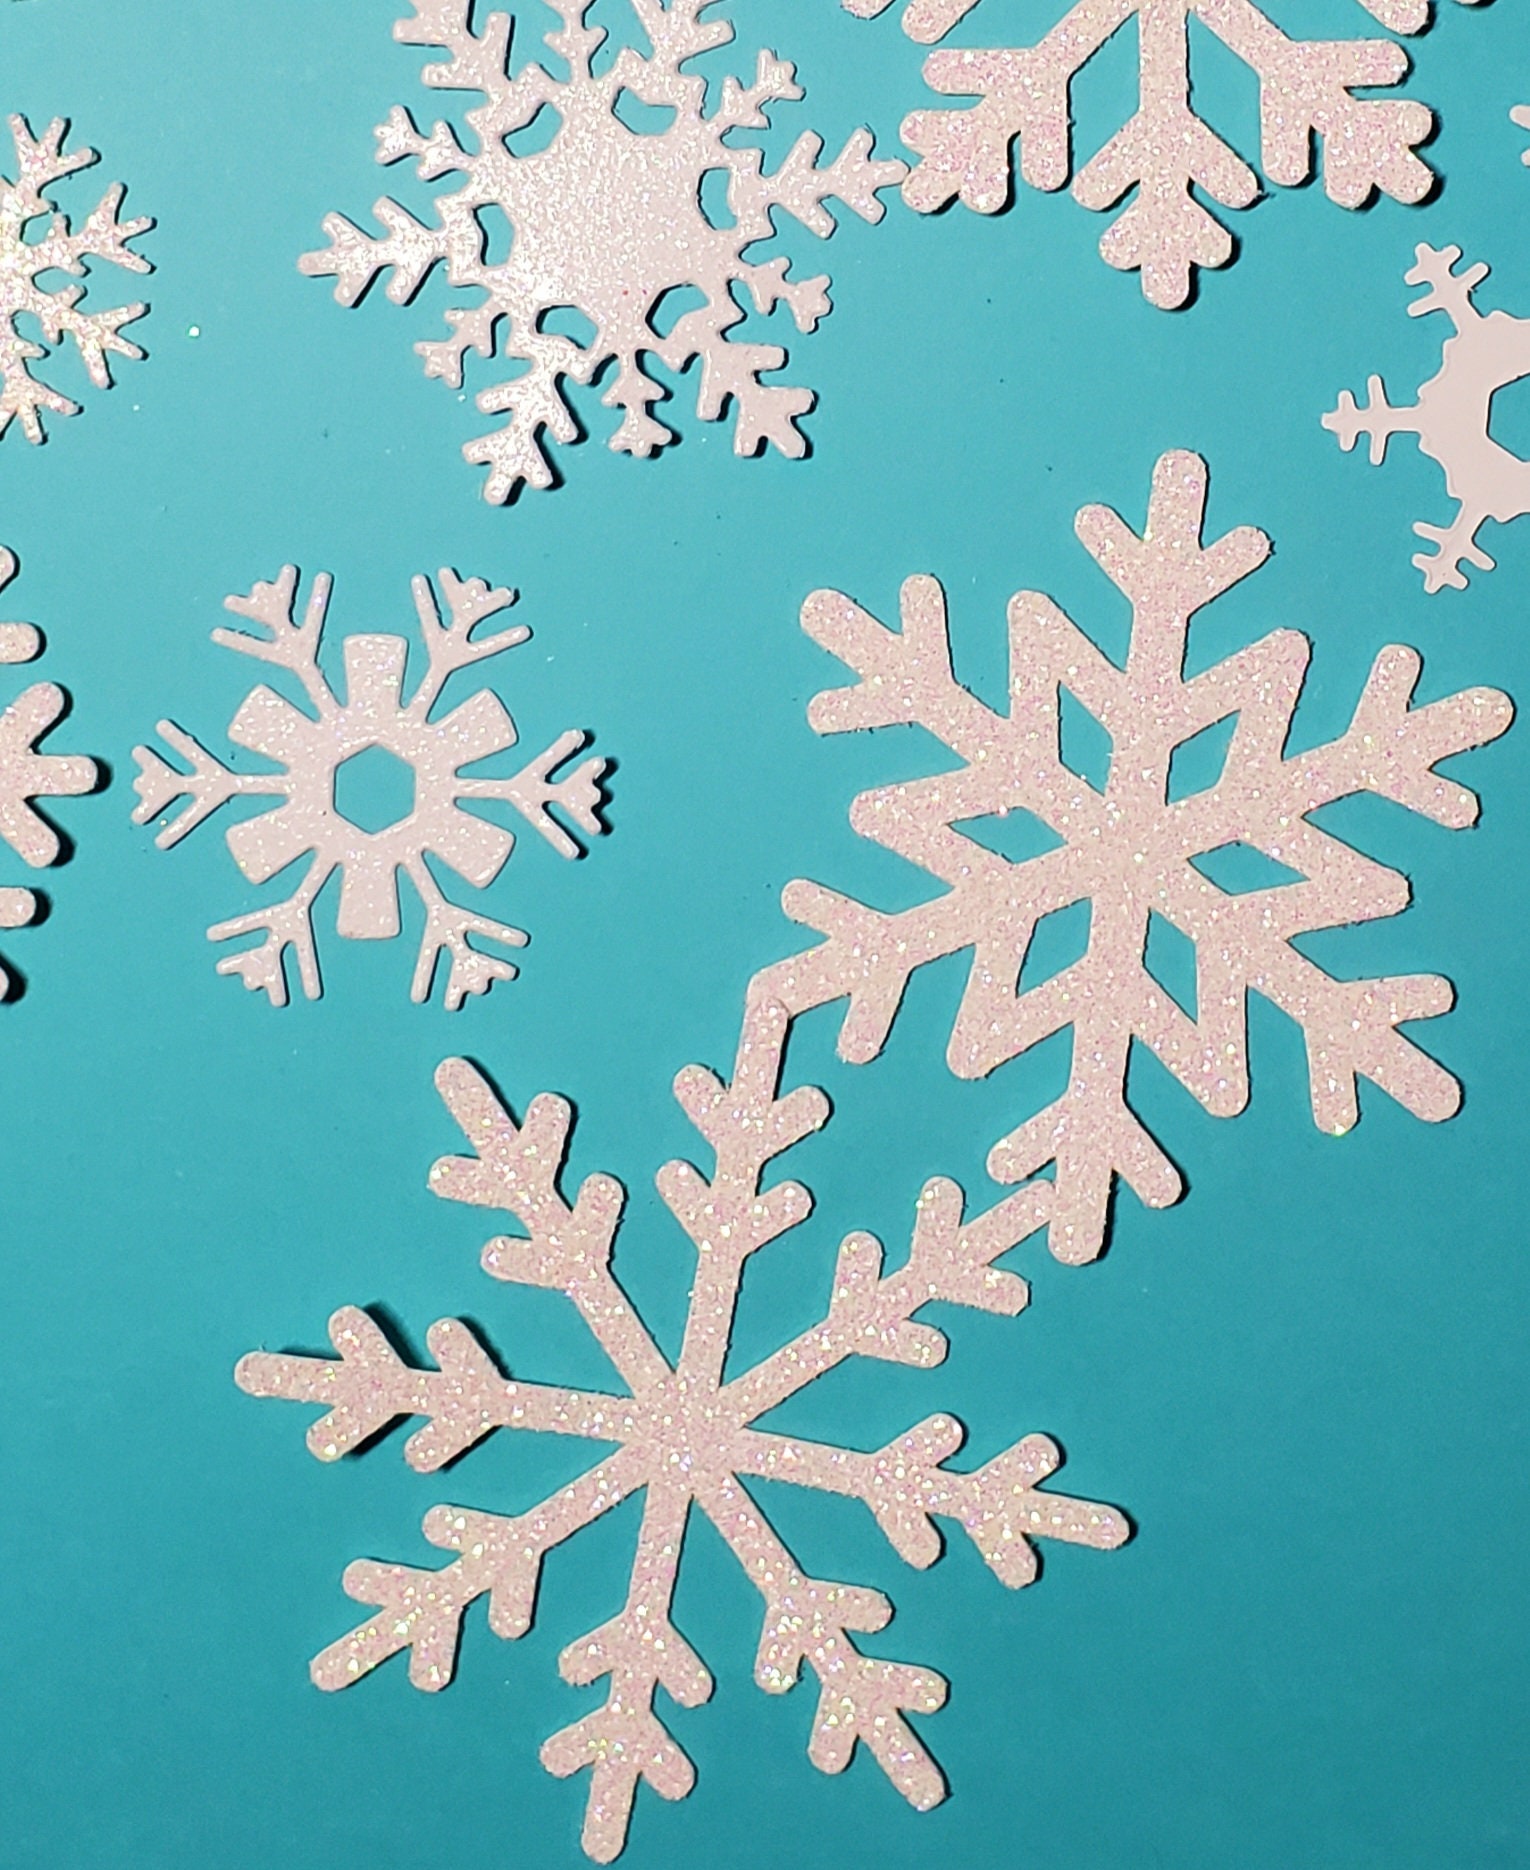 Glitter Snowflake Clip Art. Sparkle Christmas Snowflakes. Frozen, Snow,  Snowflake Clipart in Mint, Blue, Purple Glitter. Christmas Images. 